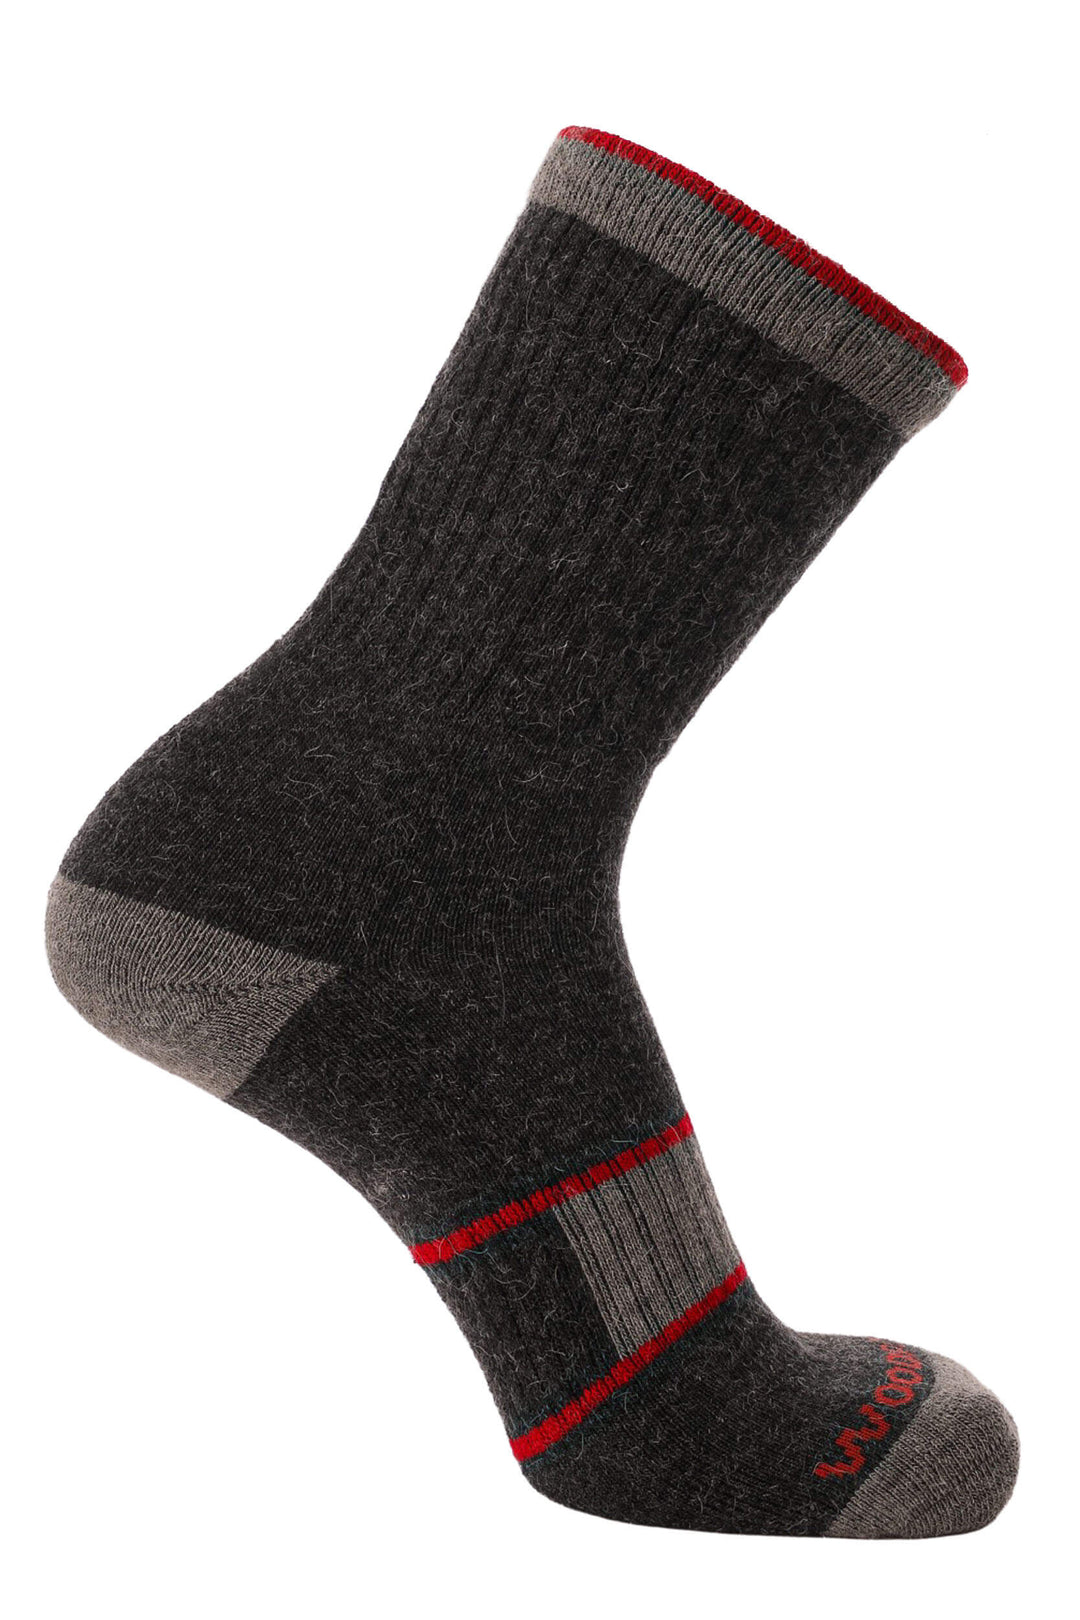 Alpaca Wool Socks - Gray - Nada Llama Crew Socks - Woodroad Gear Co.